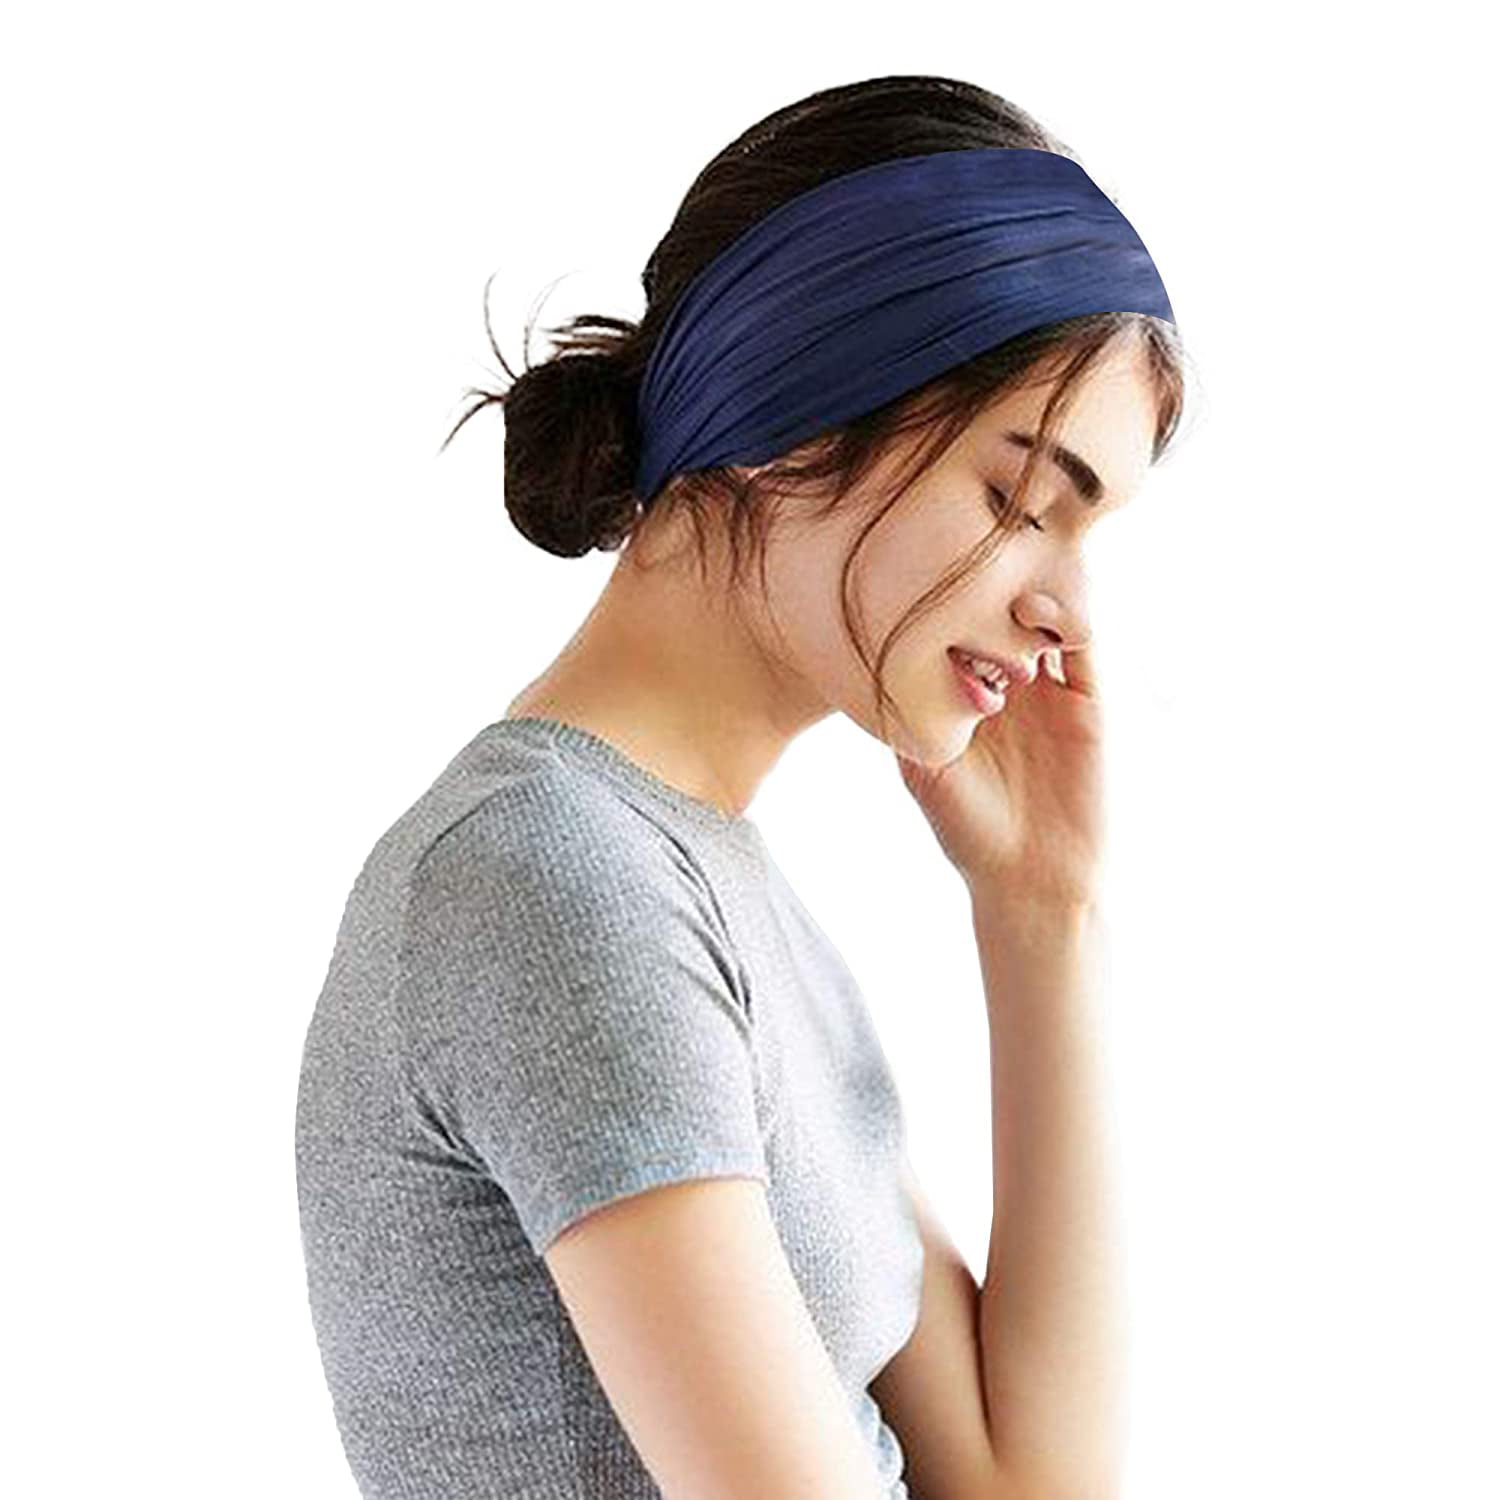 Sweatband Headband Yoga Gym Run Stretch Sport Hairband Buildin Wireless Earphone 